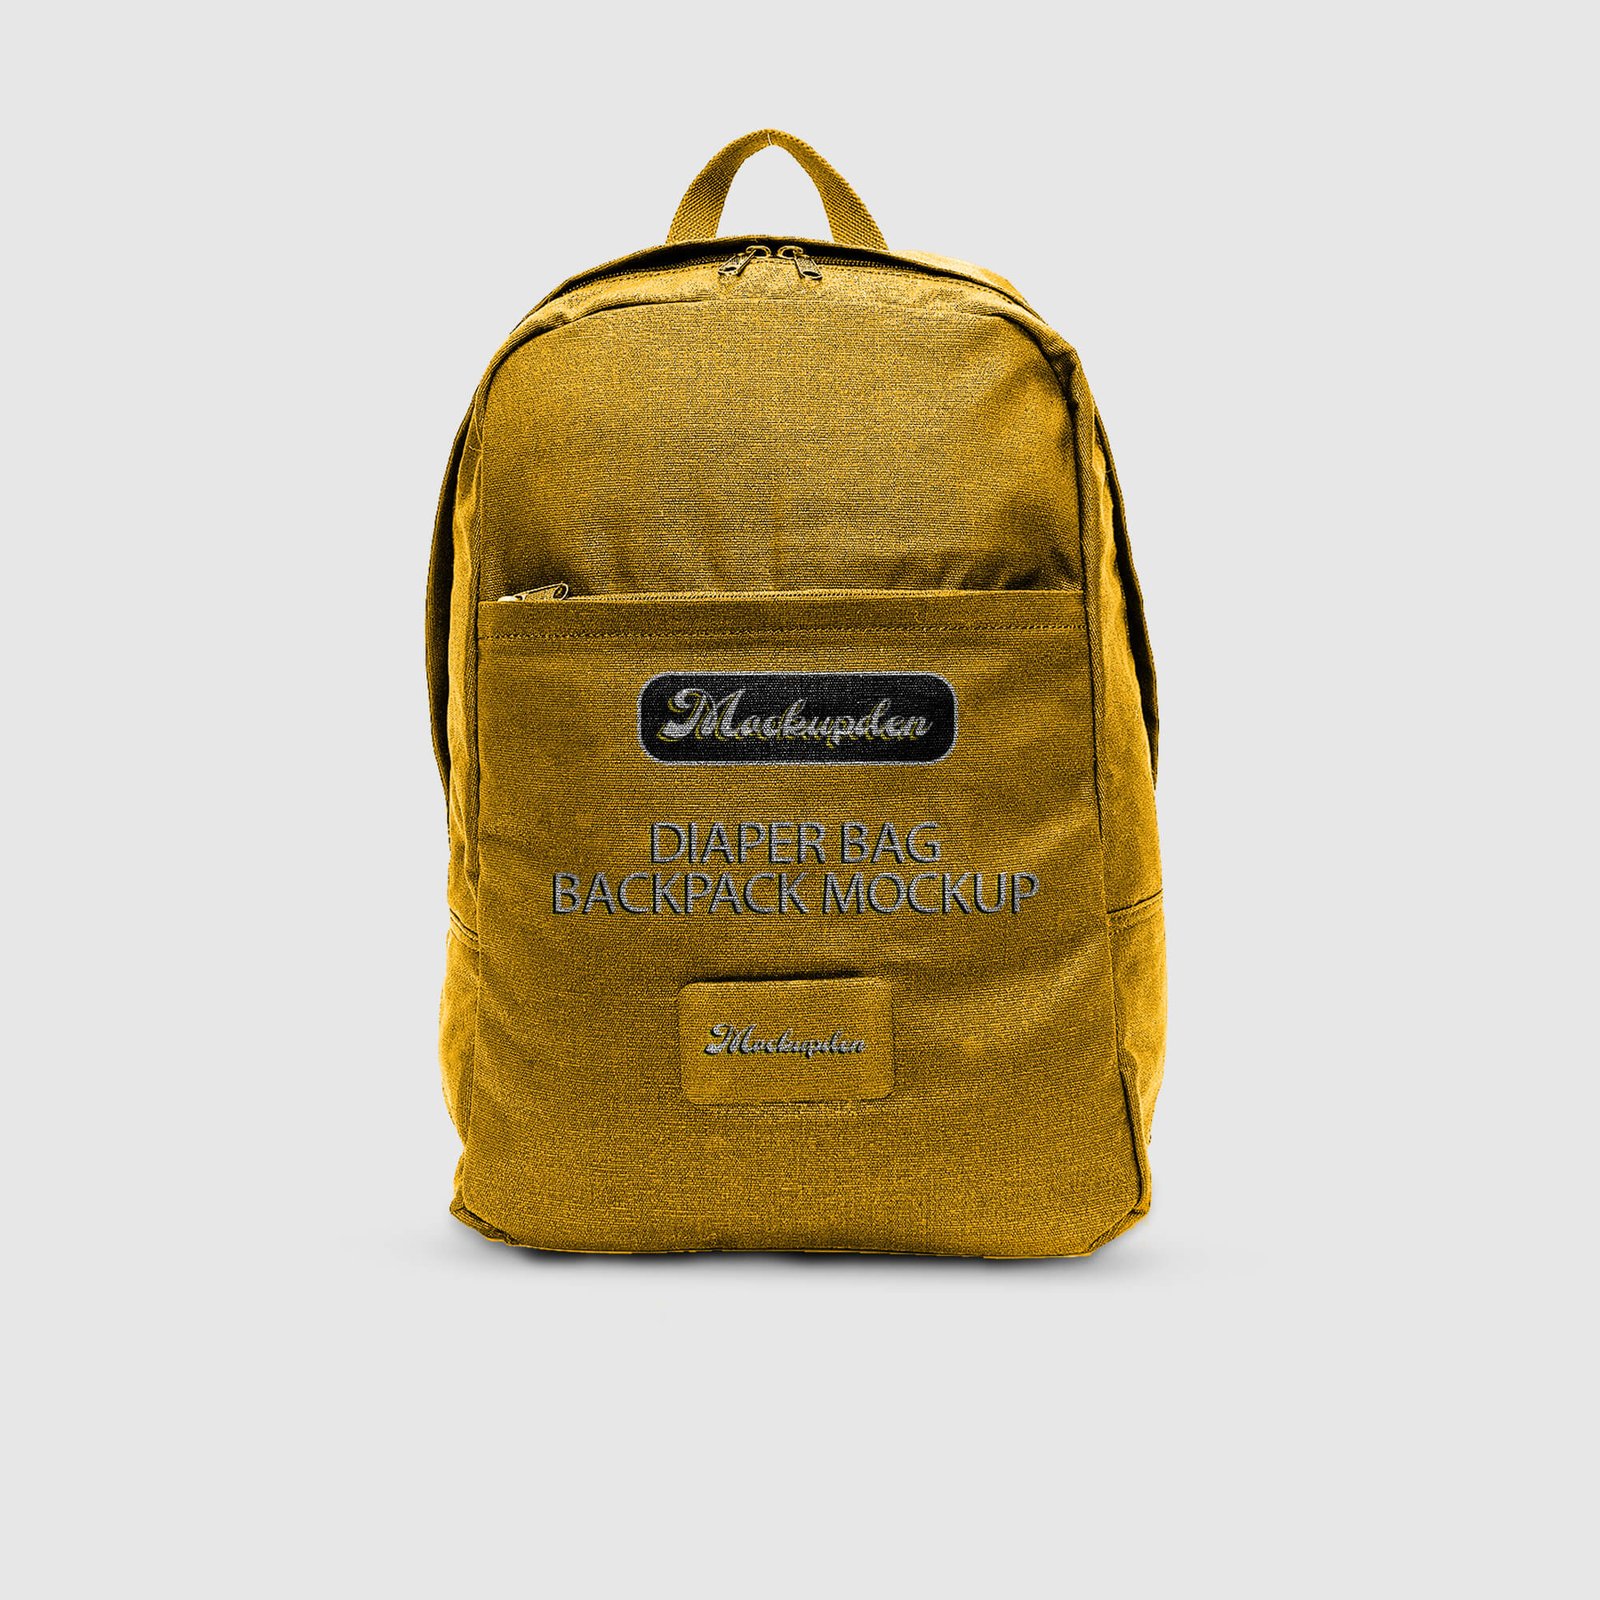 Design Free Diaper Bag Backpack Mockup PSD Template